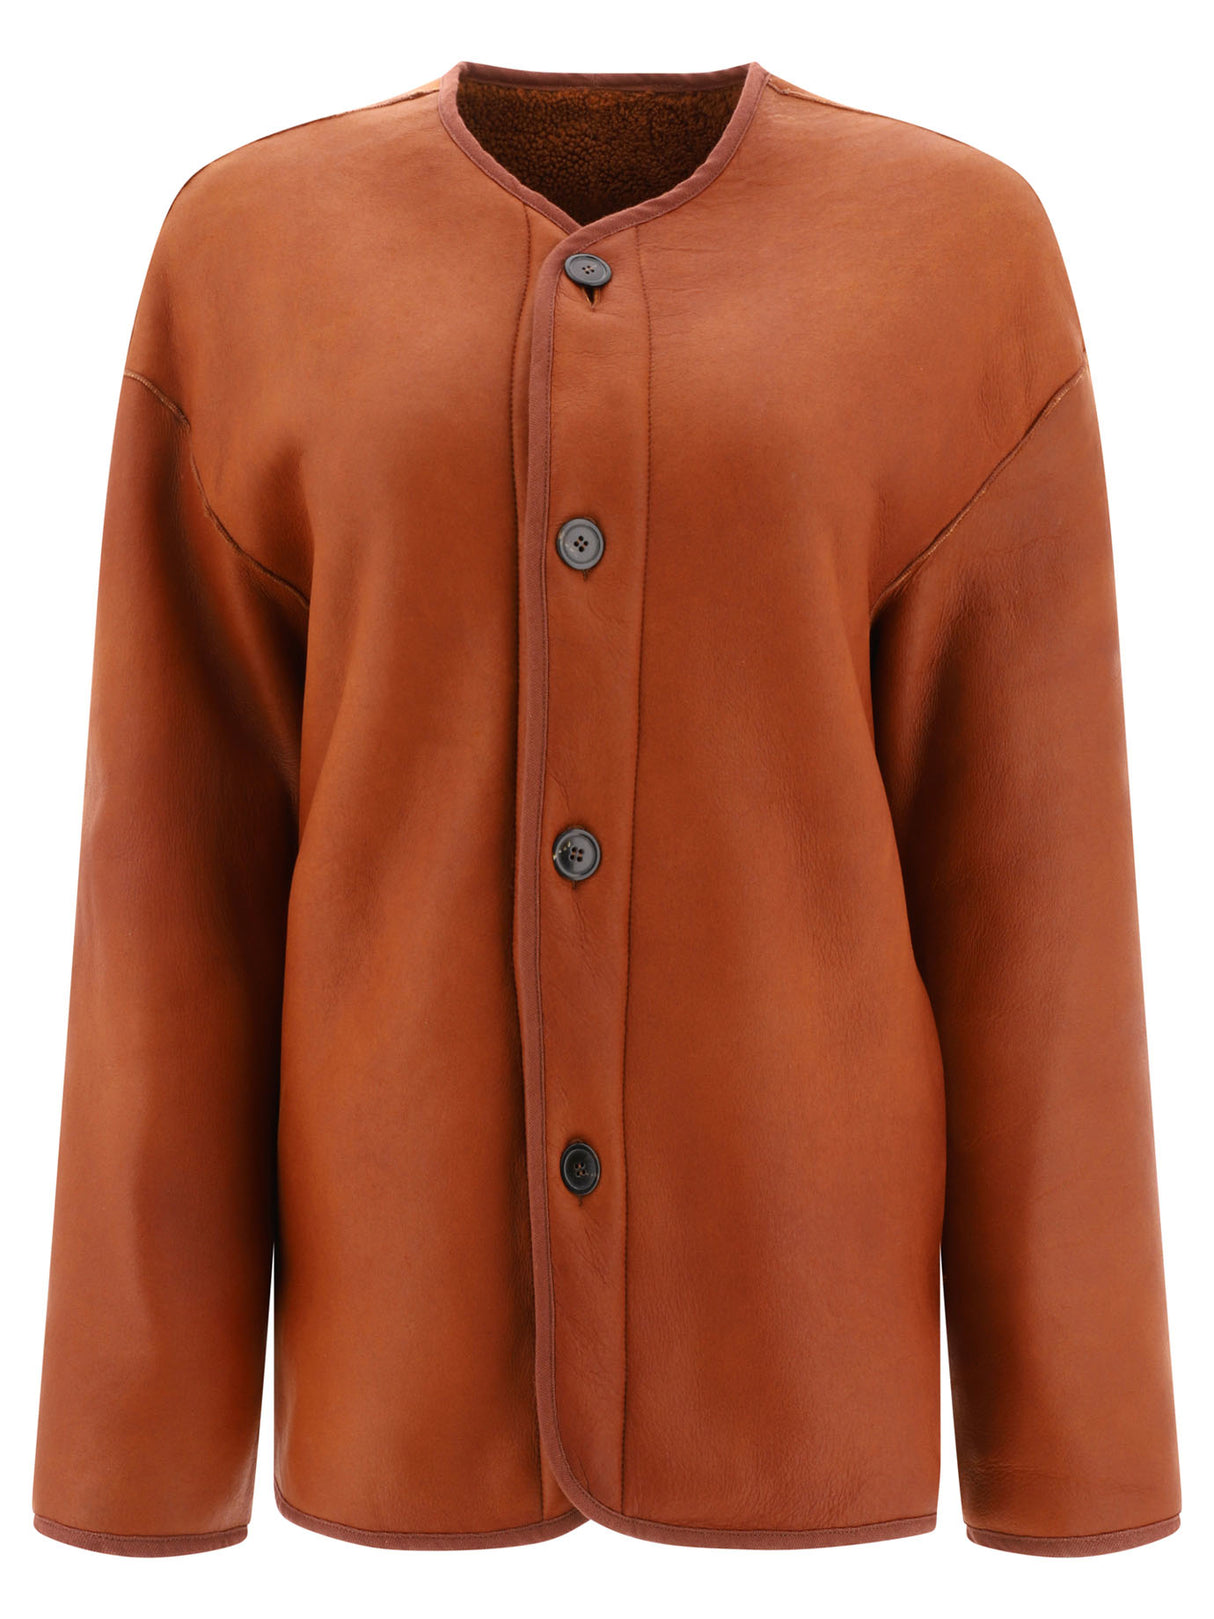 GIOVI Reversible Shearling Jacket for Women